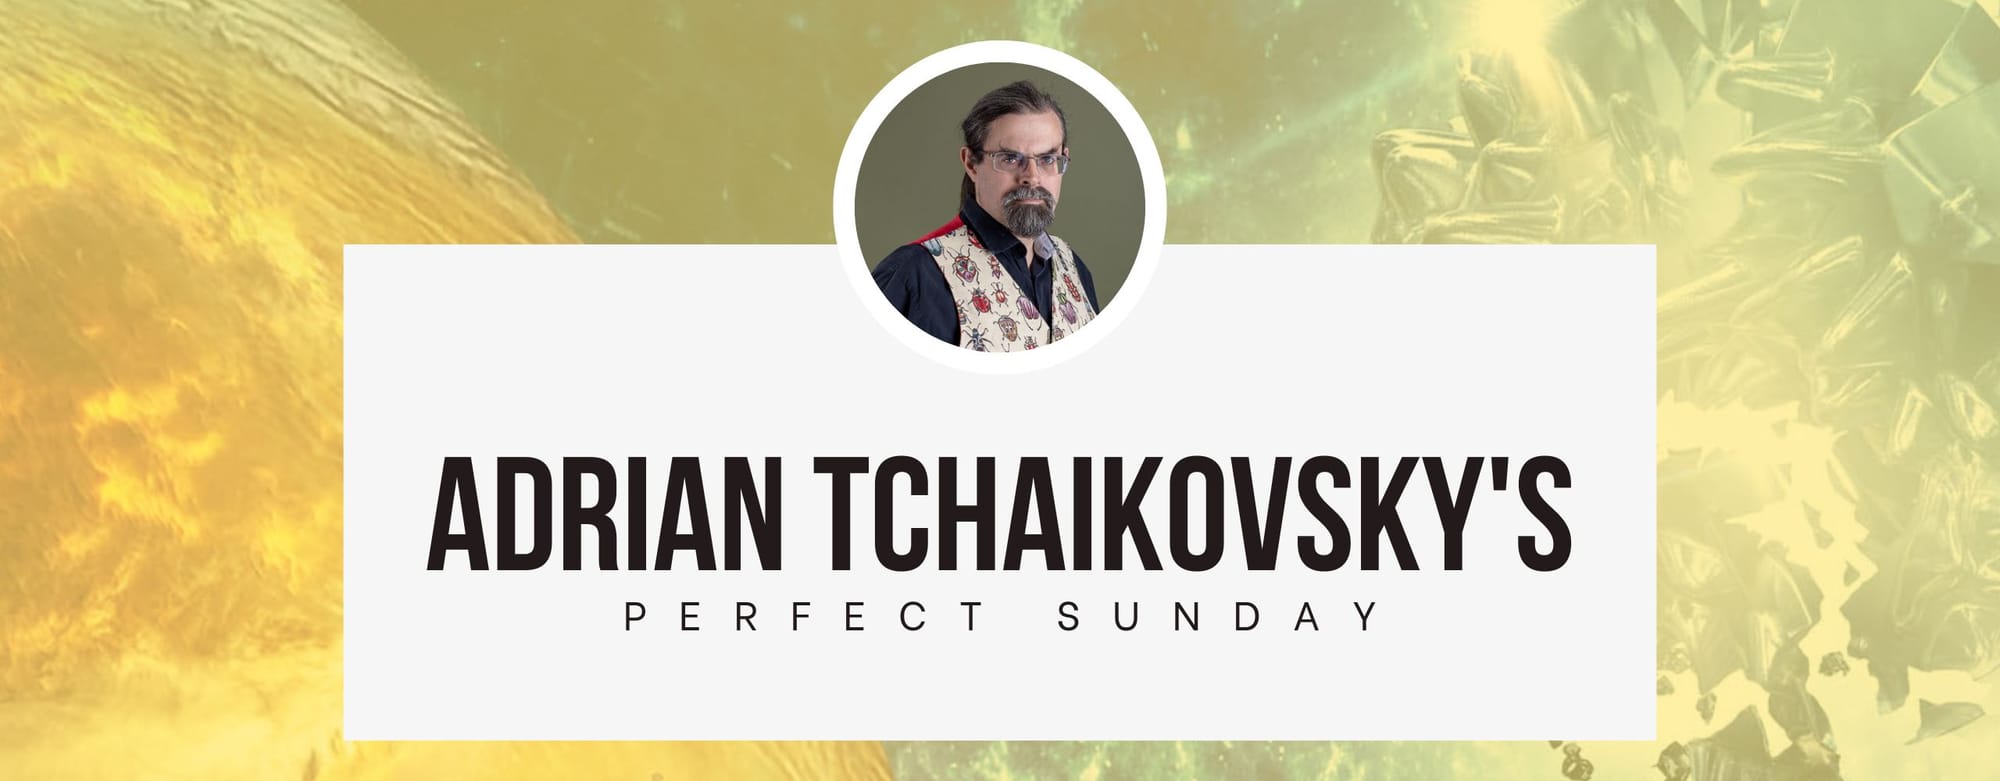 A perfect Sunday with... Adrian Tchaikovsky